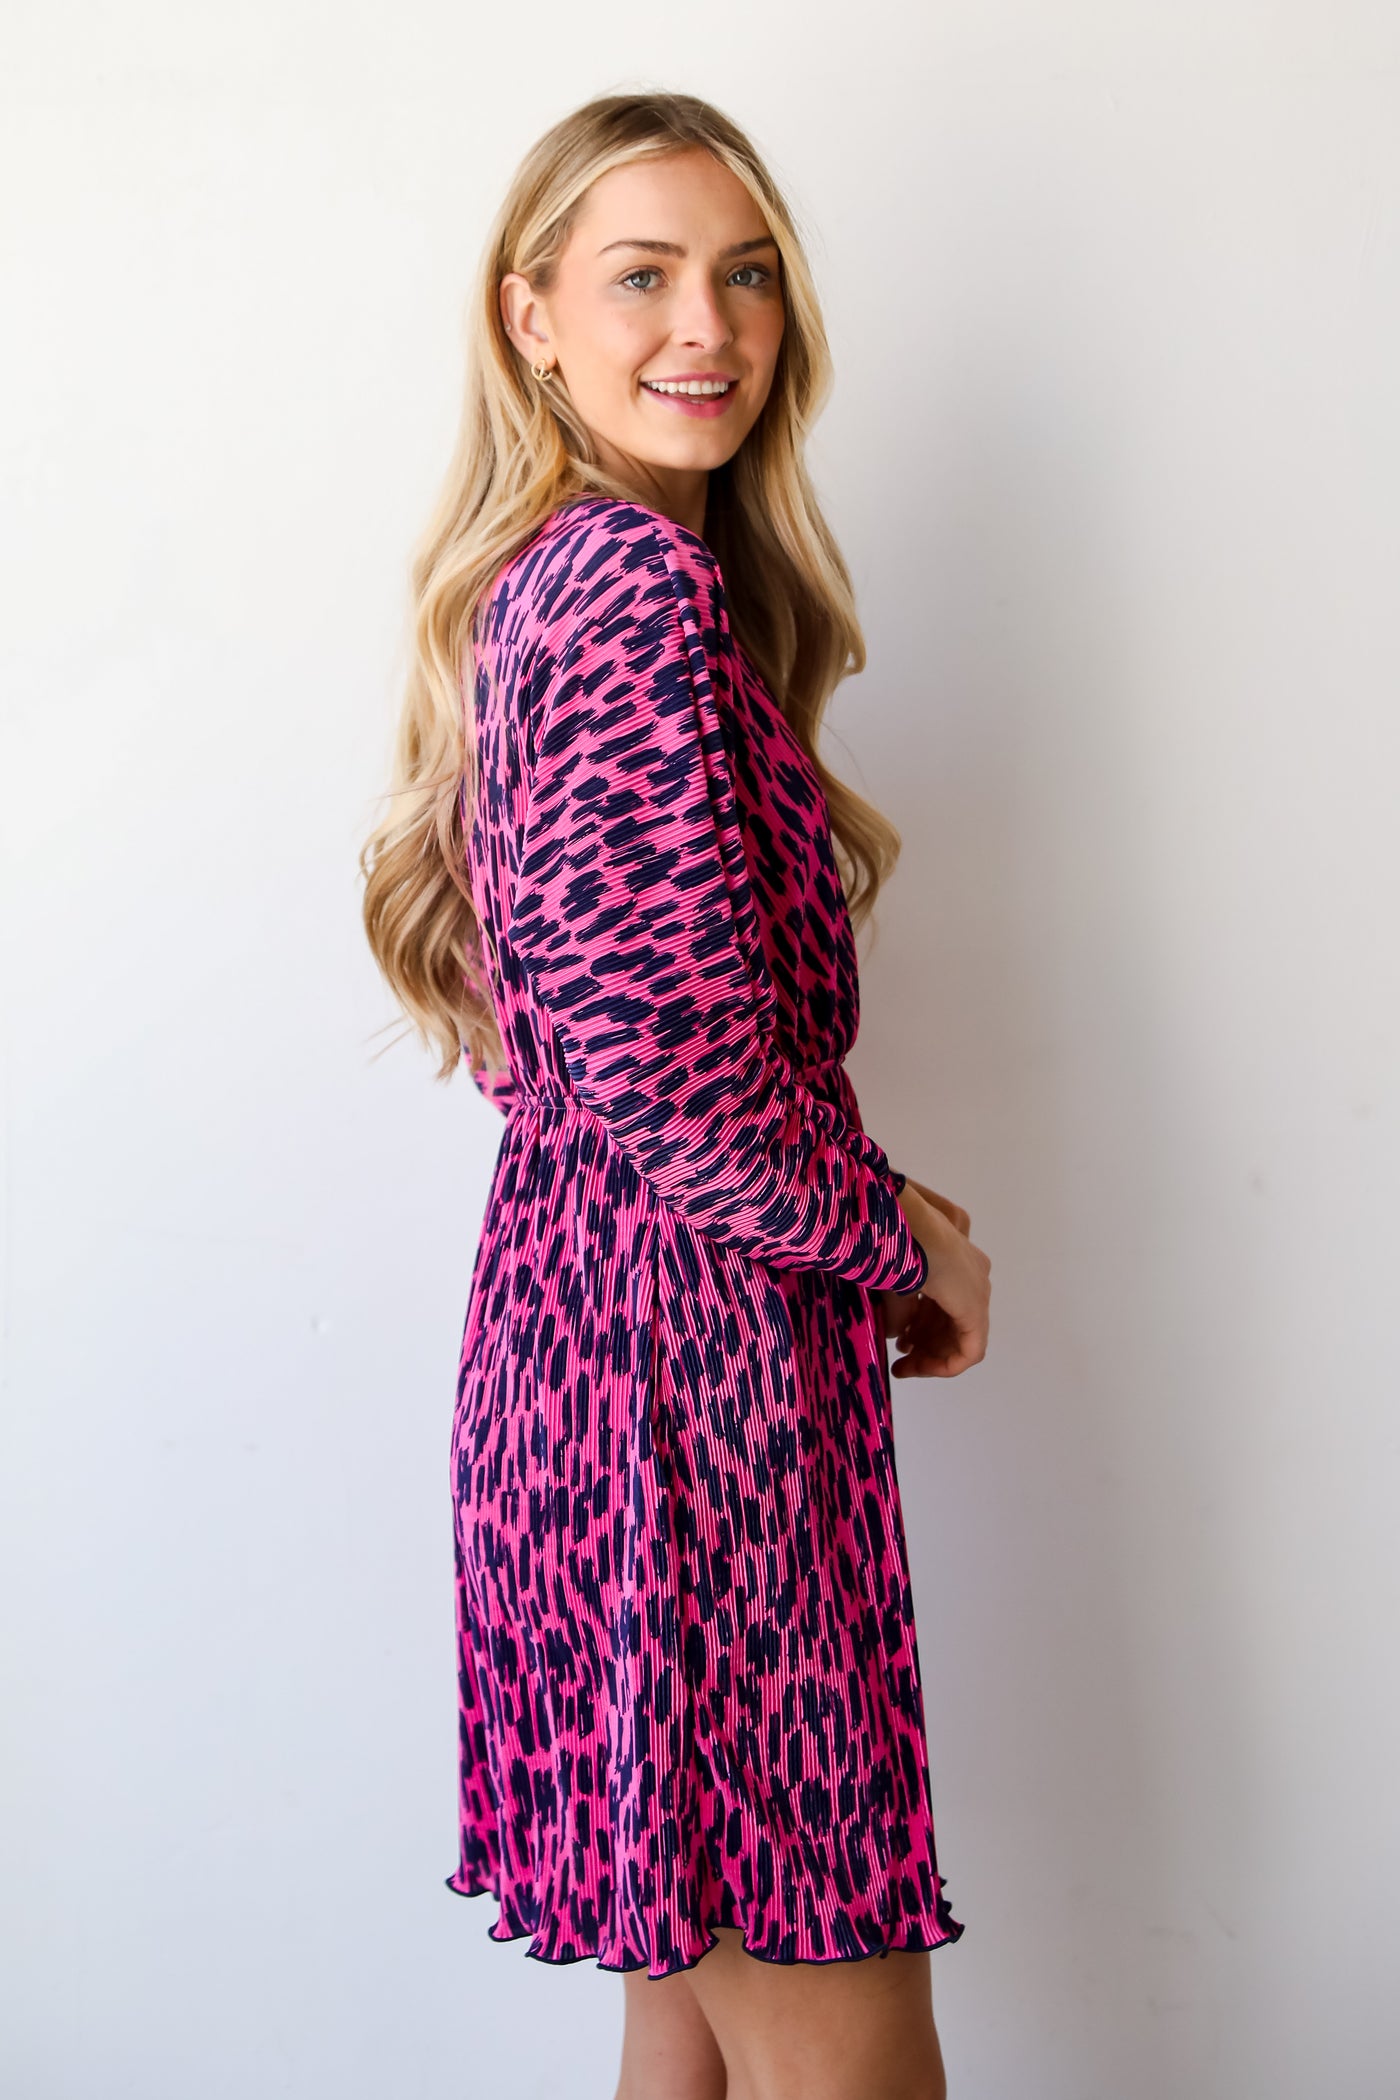 long sleeve Pink Plisse Mini Dress.  Cheap Dresses. Online cheap dresses. Pink Dress. Online Women's Boutique